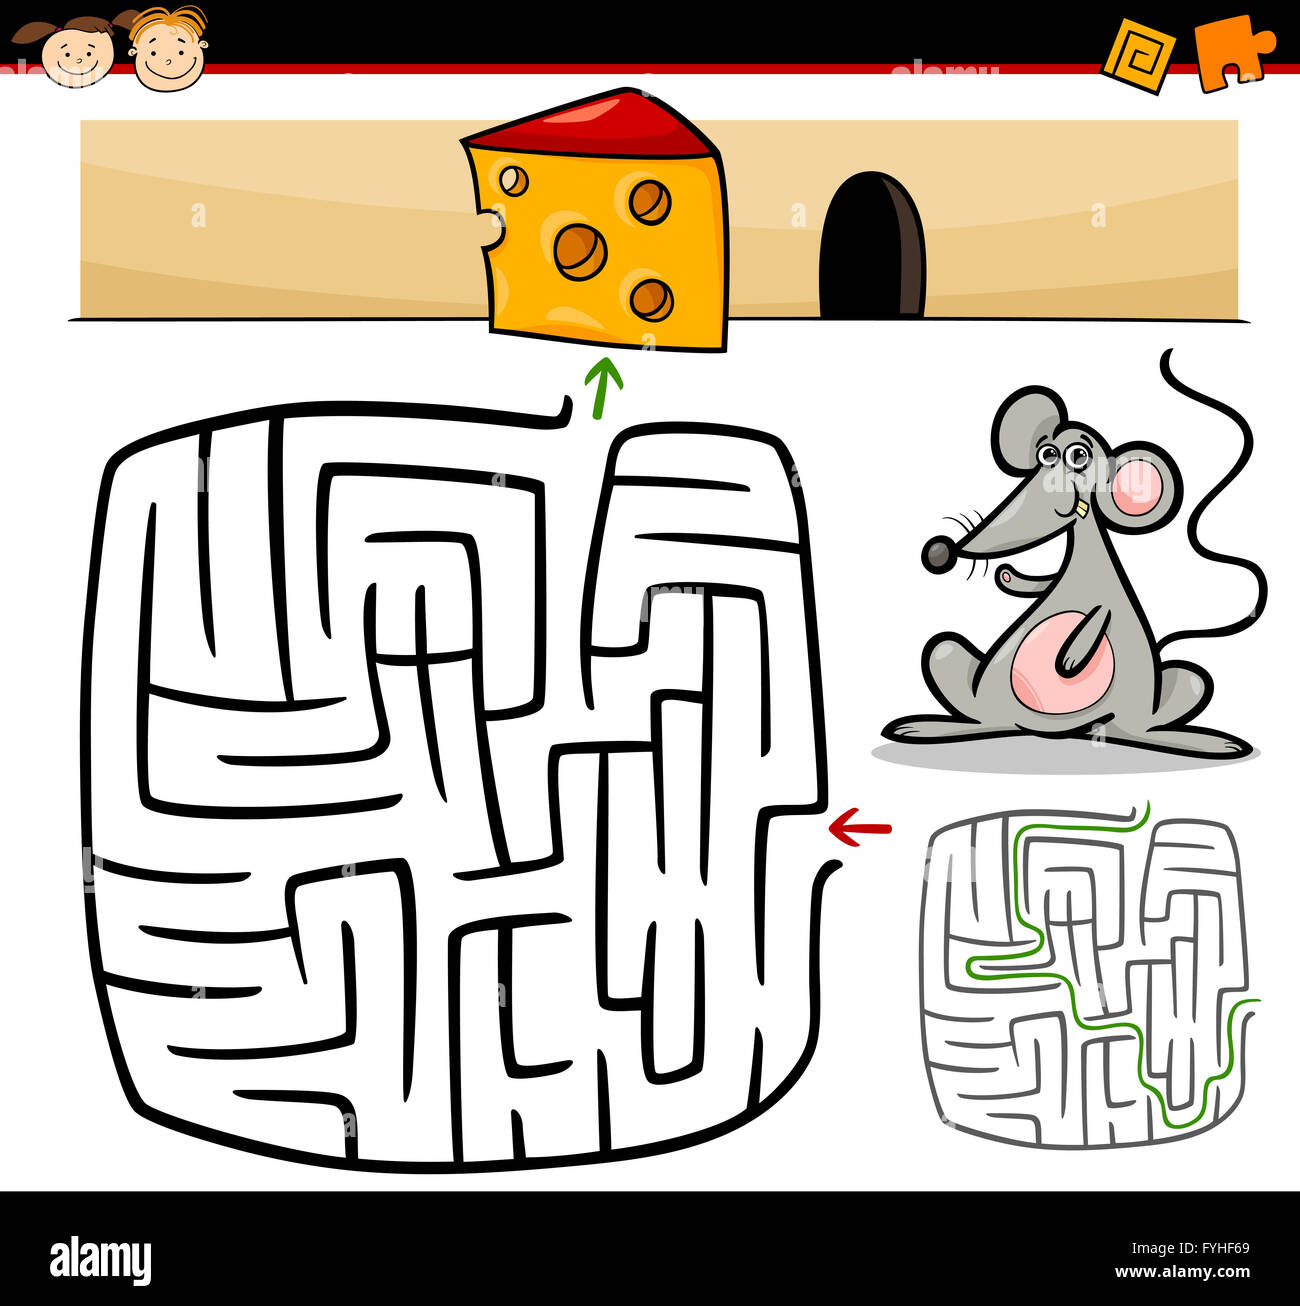 cartoon maze or labyrinth game Stock Photo